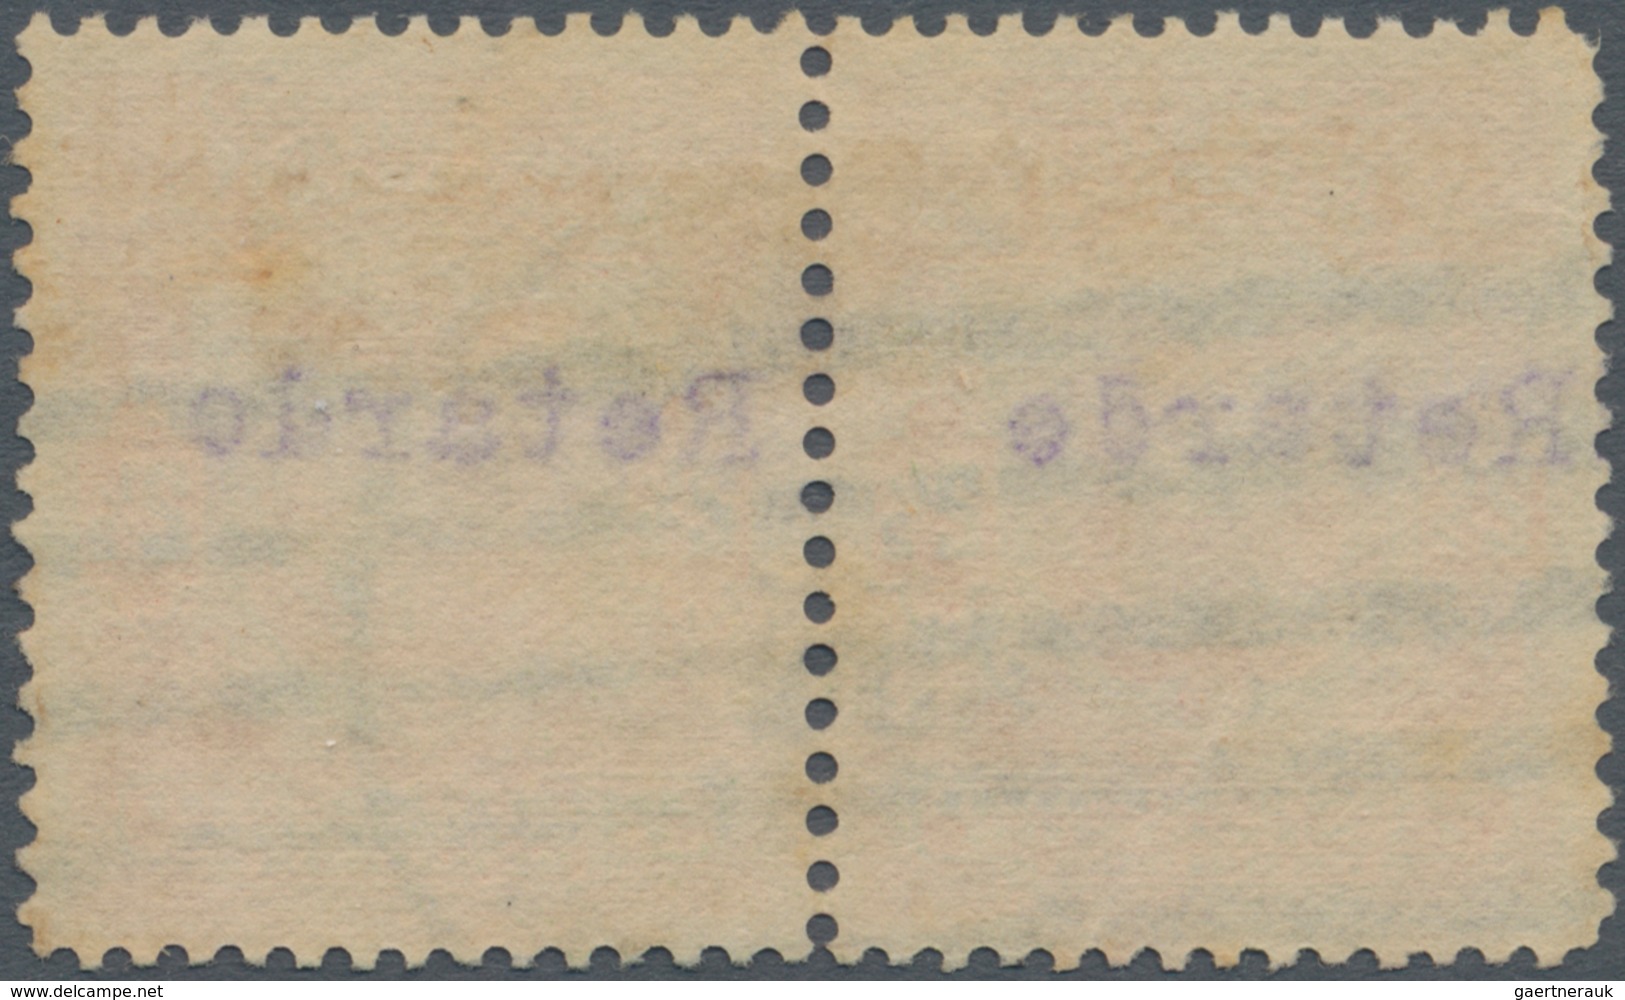 Panama: 1910, "Retardo" - Typewritten On 2 1/2 C. Red, Horizontal Pair Used With Central Postmark 13 - Panama